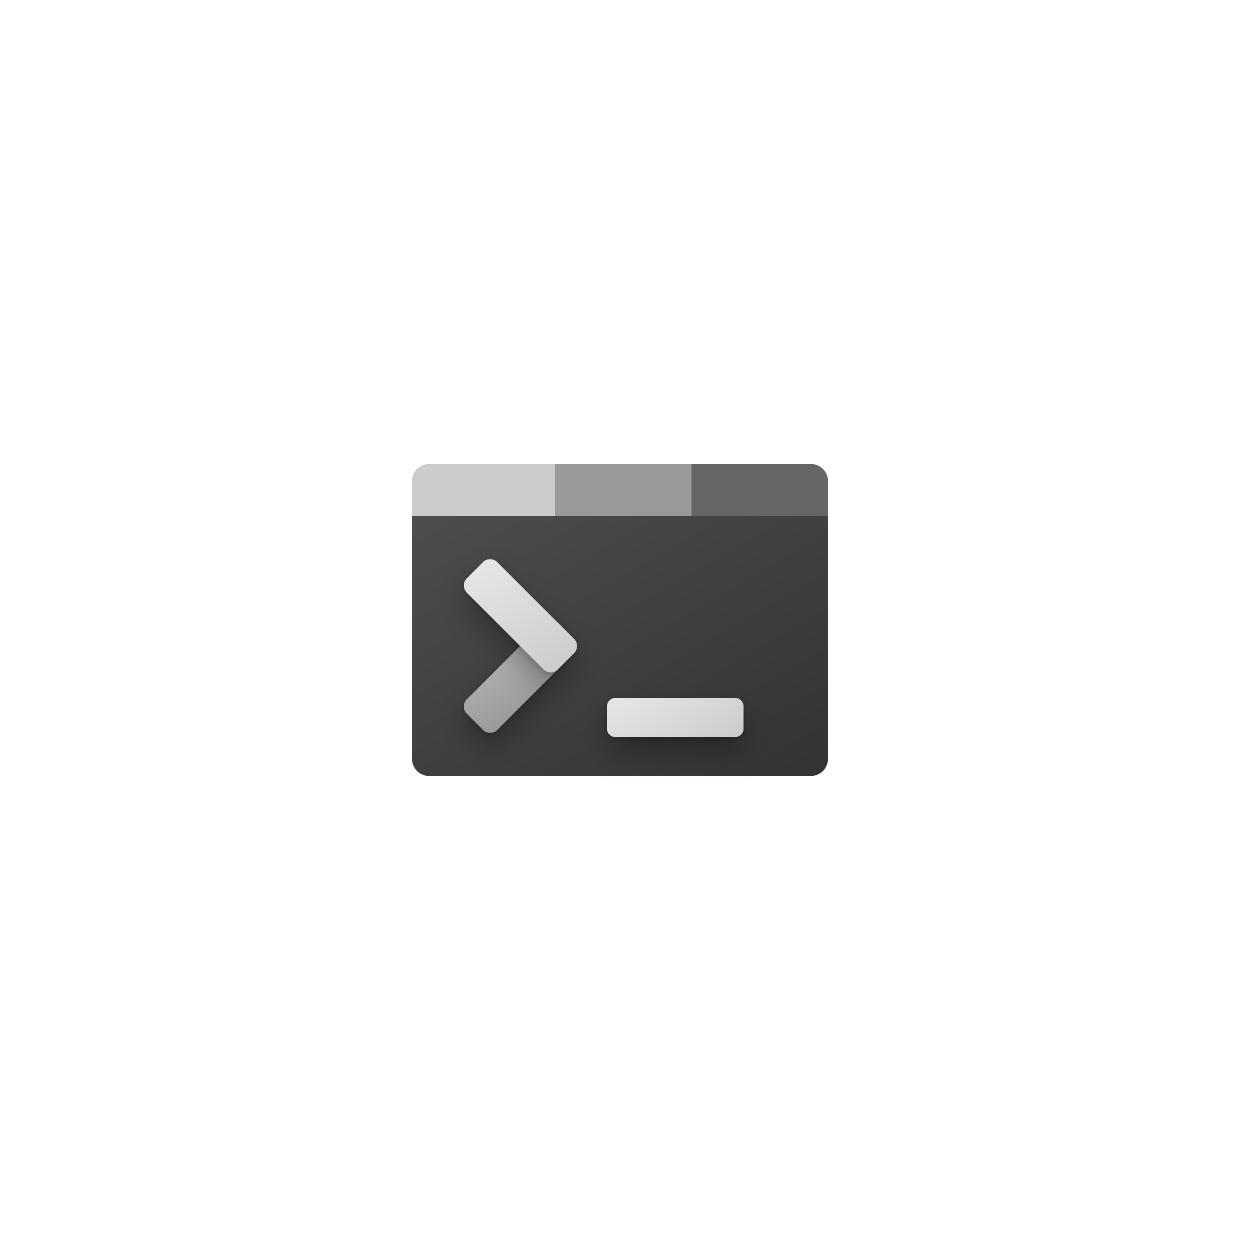 windows-terminal-icon.jpg